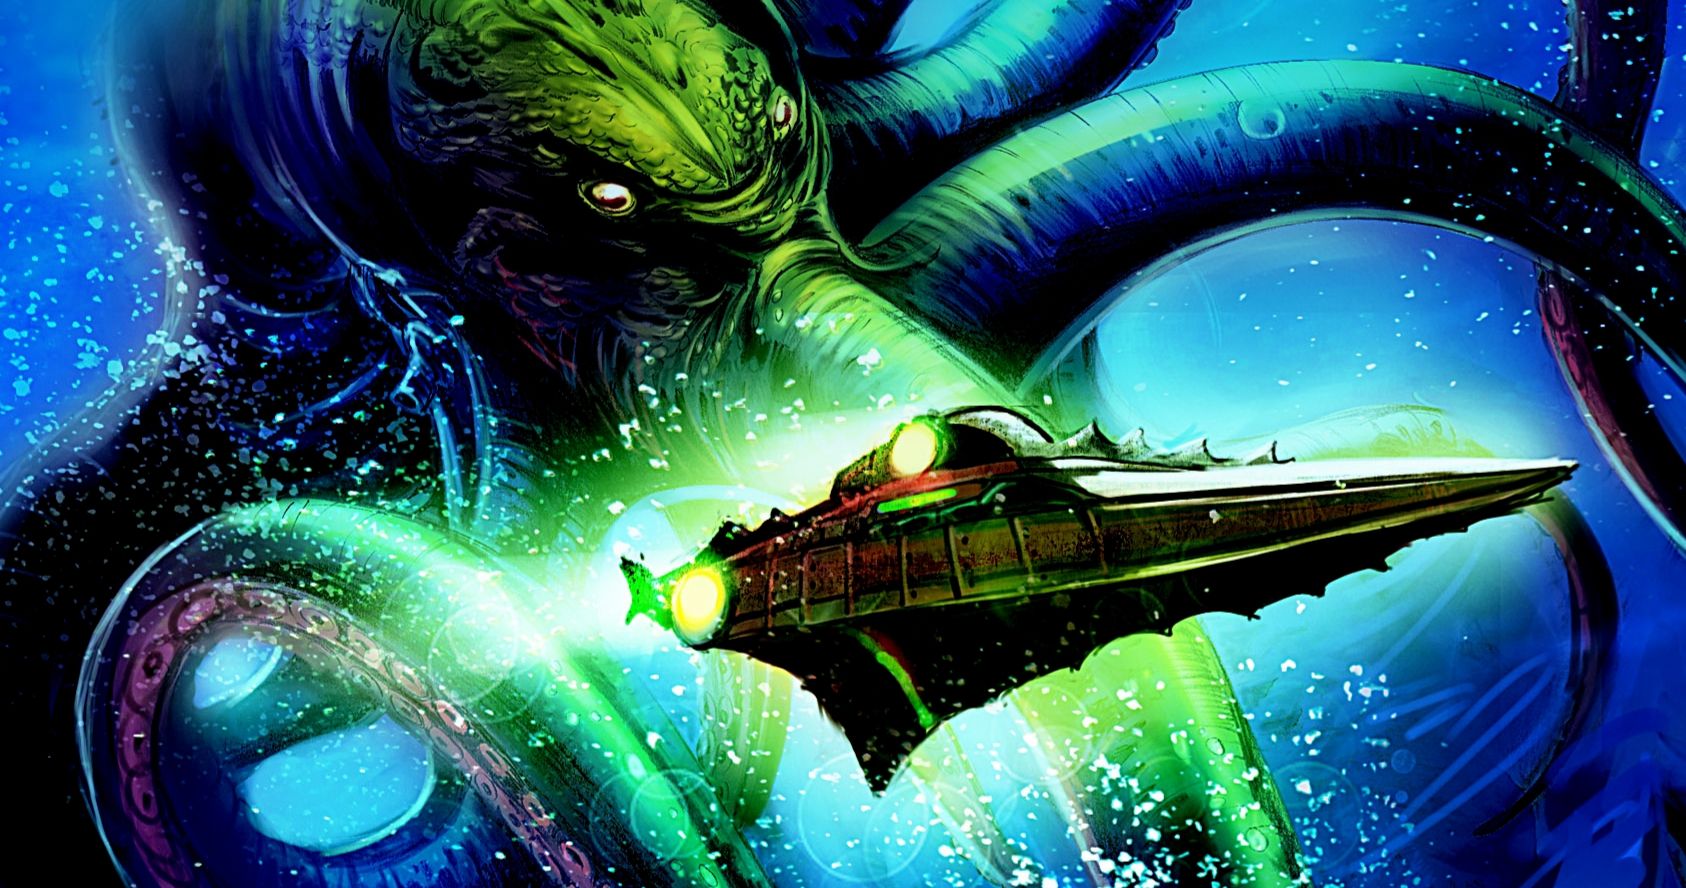 20,000 Leagues Under the Sea Series Nautilus Heads to Disney+